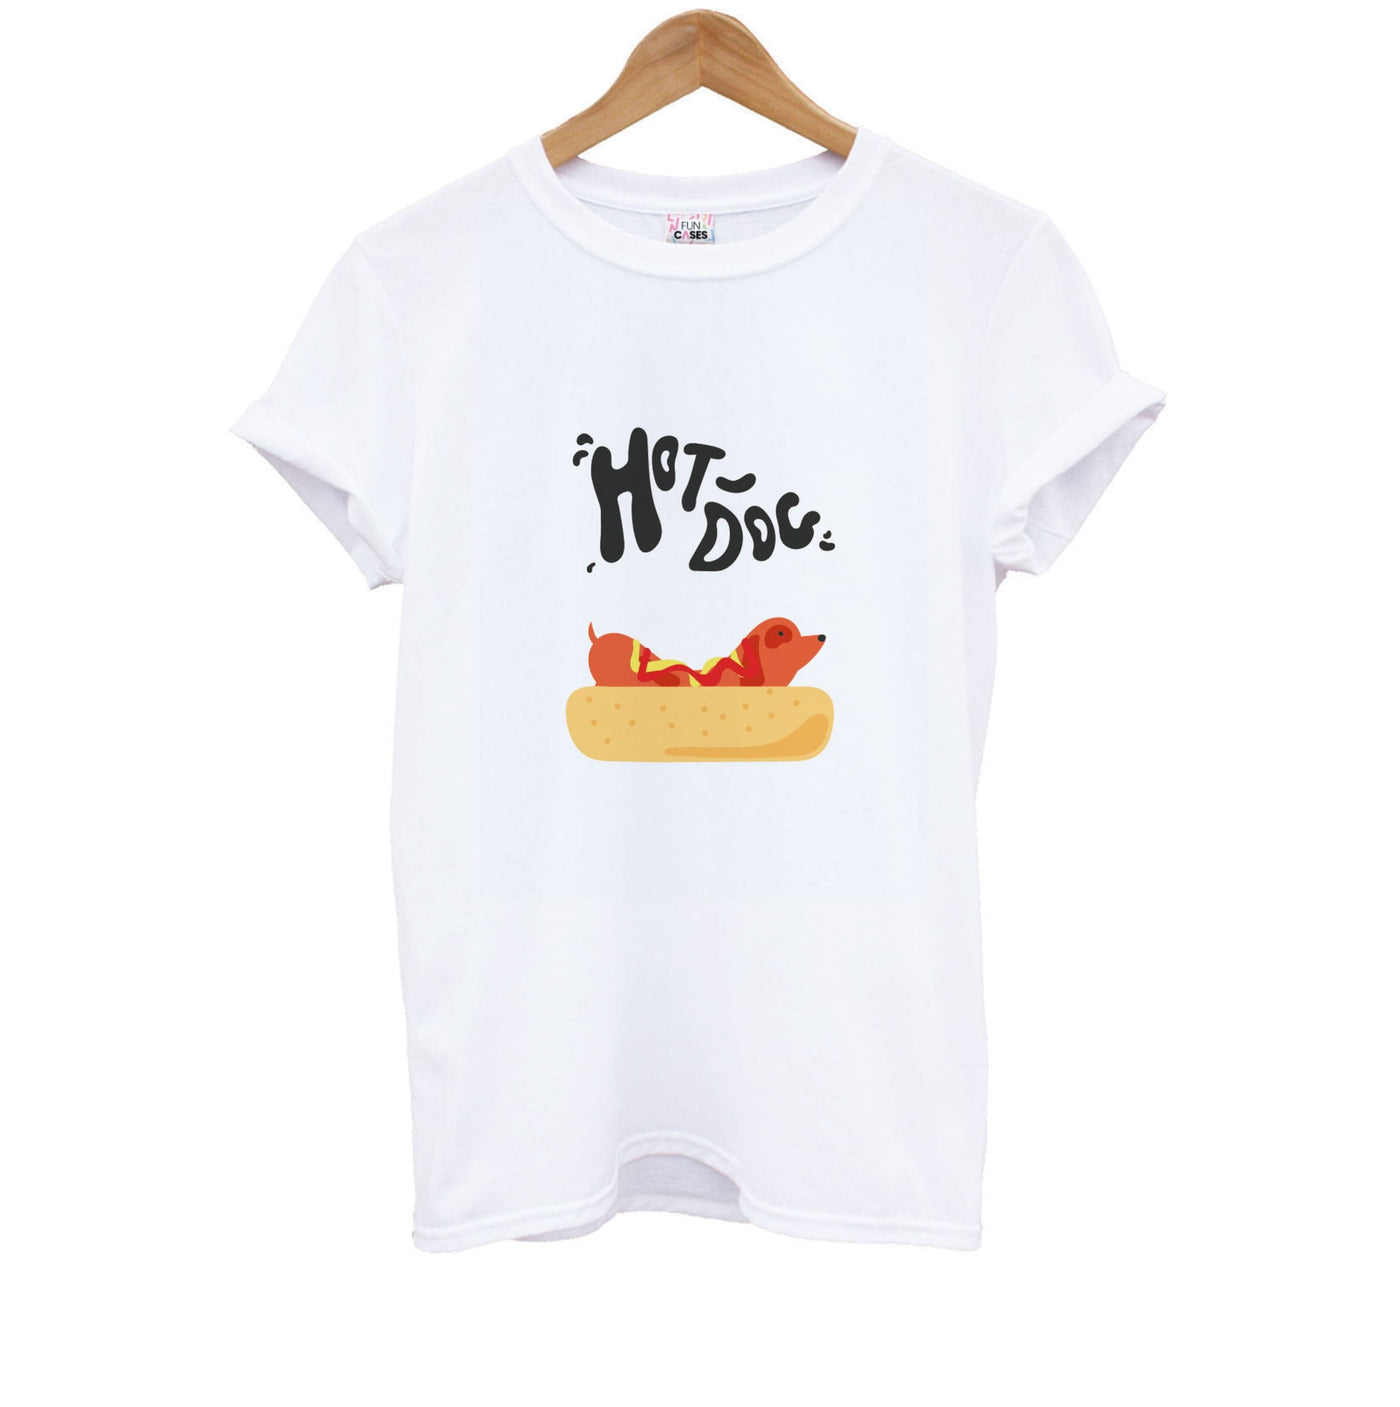 Hot Dog - Dachshunds Kids T-Shirt